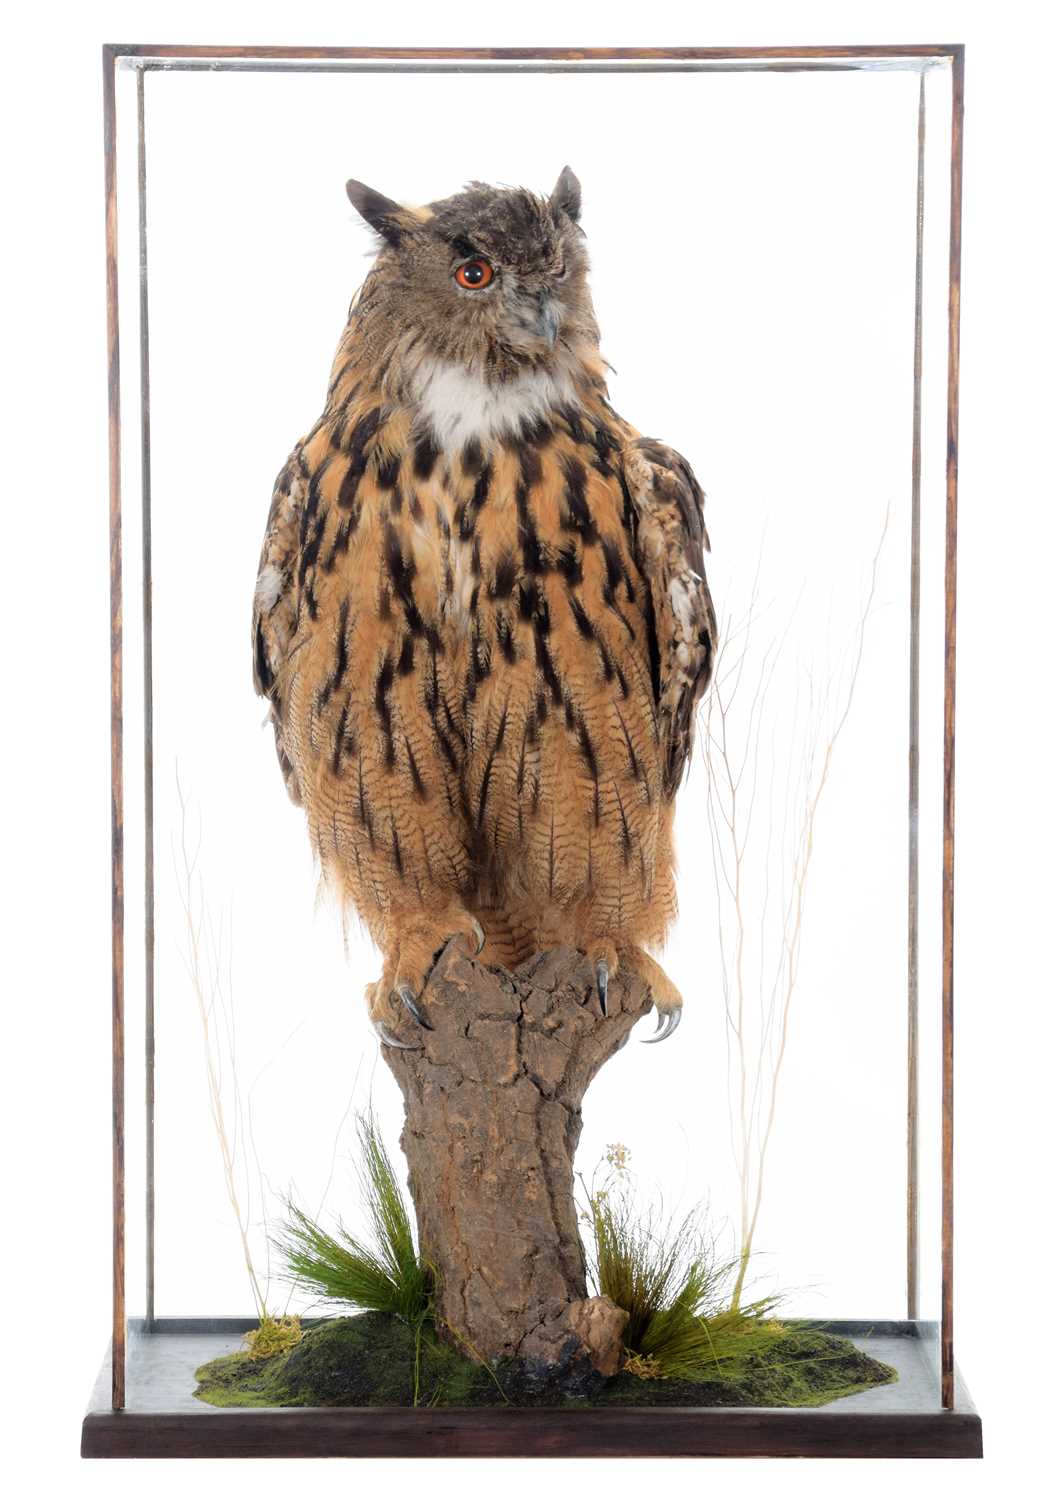 Taxidermy: A Cased European Eagle Owl (Bubo bubo), circa 21st century, a high quality large full